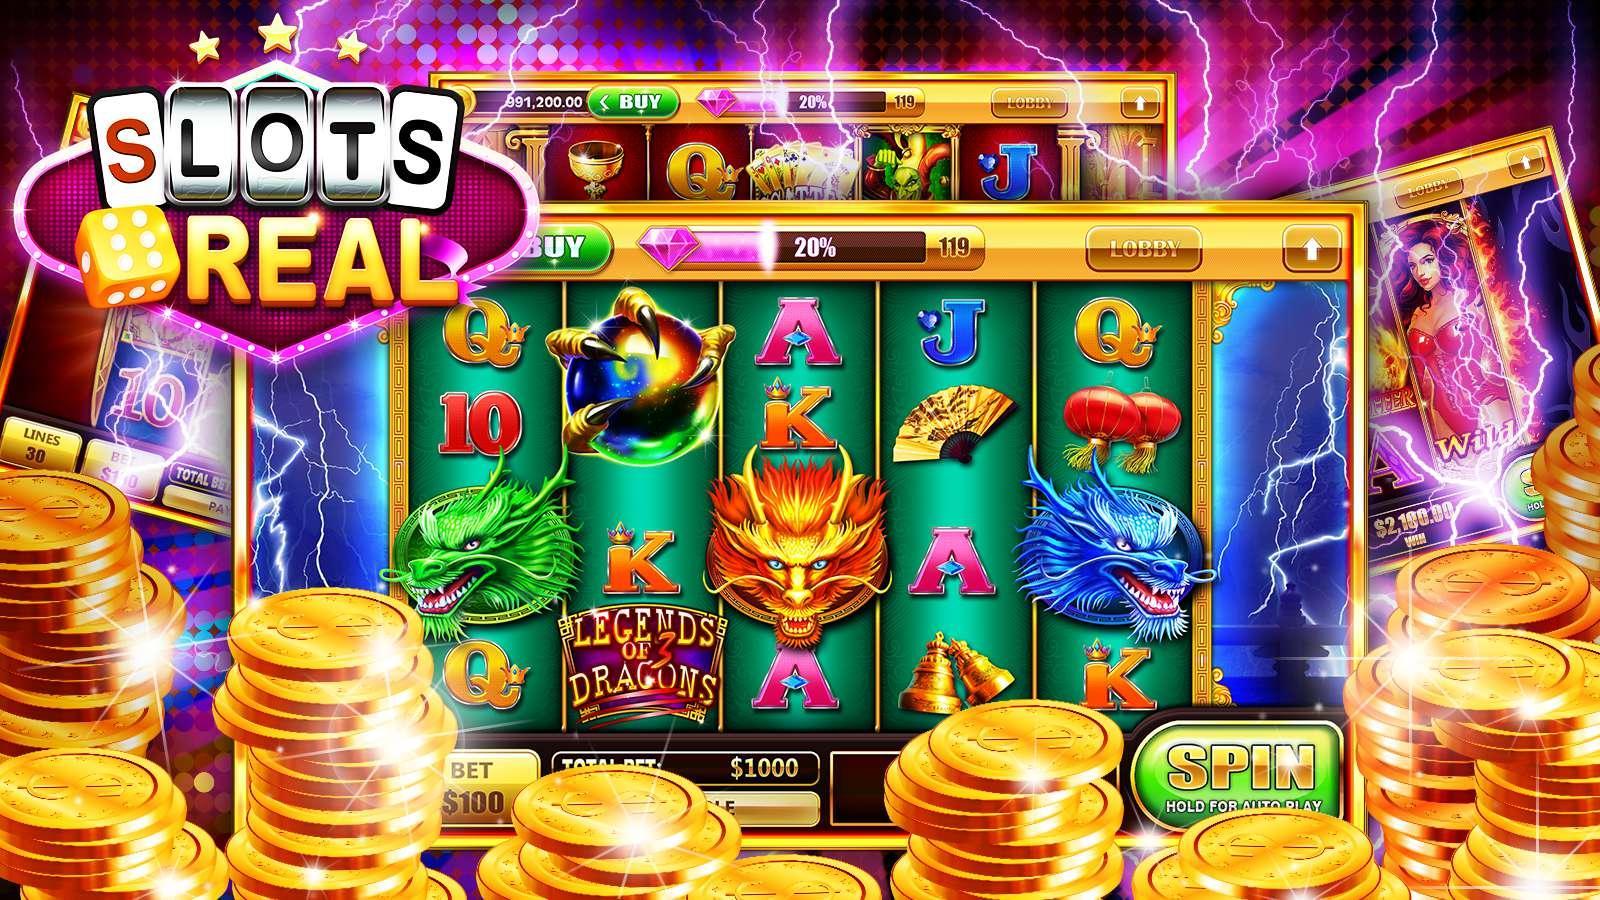 Fora casino slot games free play online ego casino отзывы